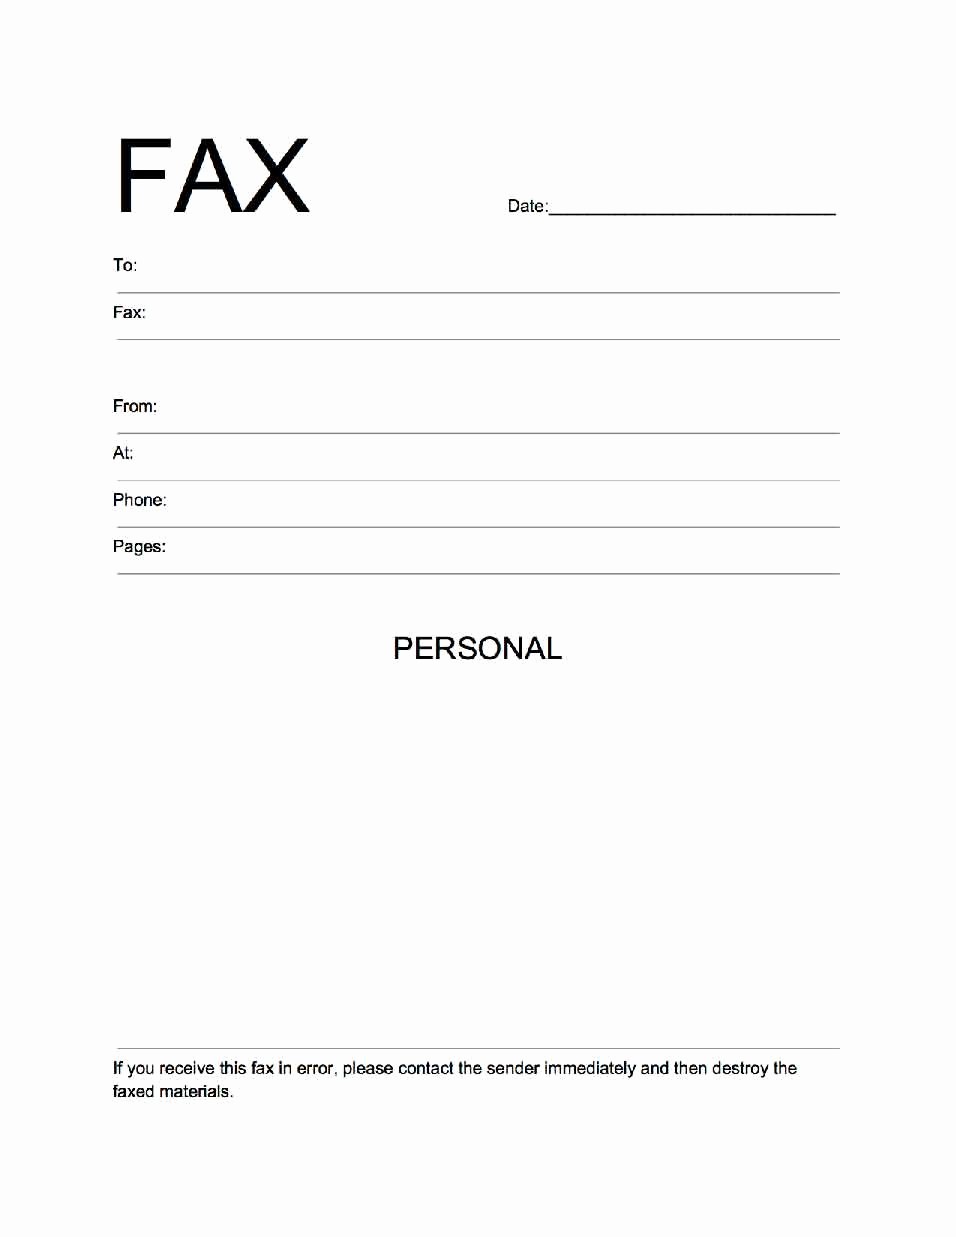 Basic Fax Cover Sheet Template Beautiful Pin by Calendar Printable On Printable Calendar